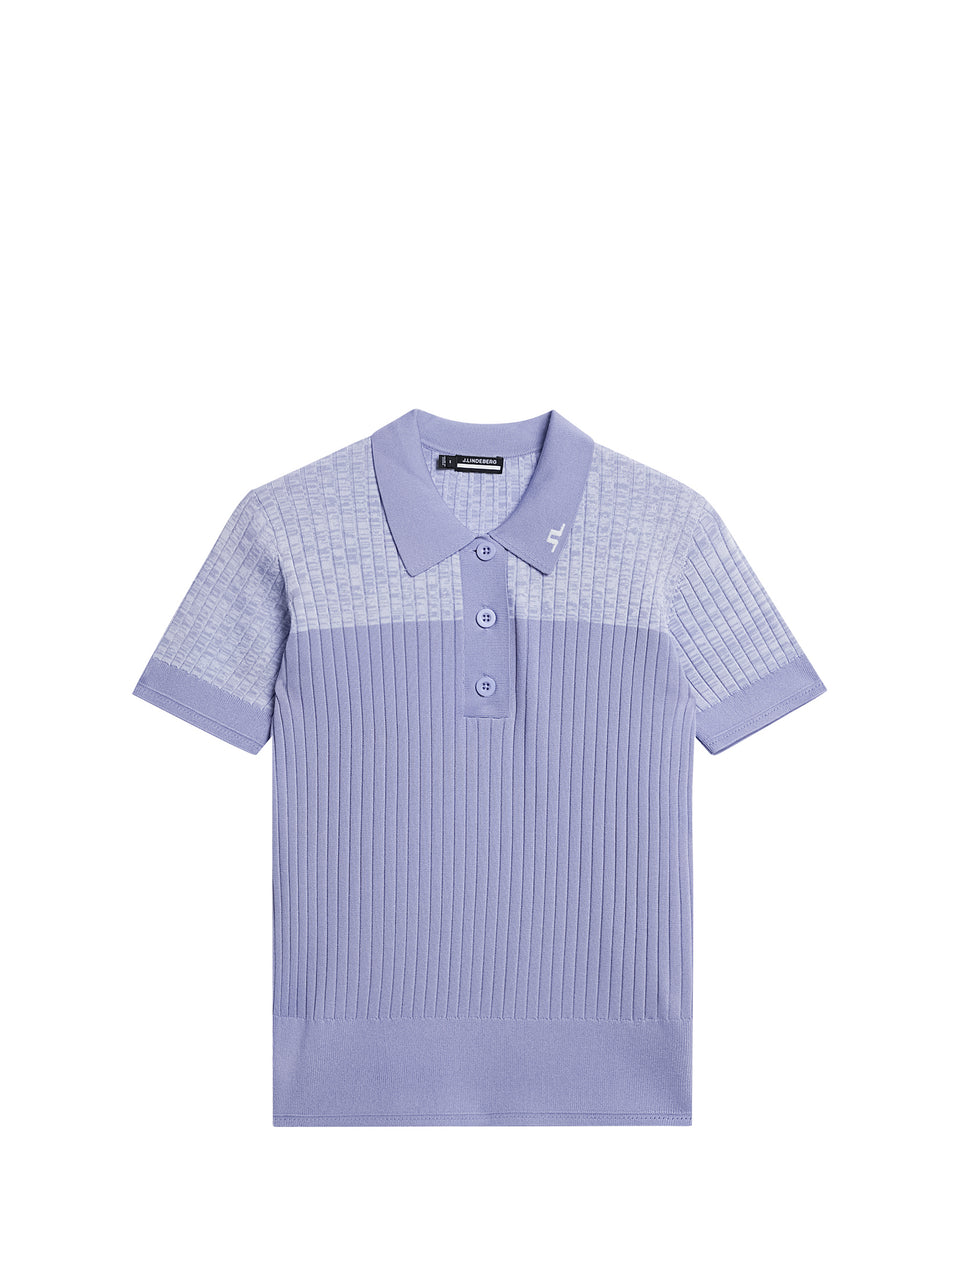 Acacia Knitted Shirt / Sweet Lavender